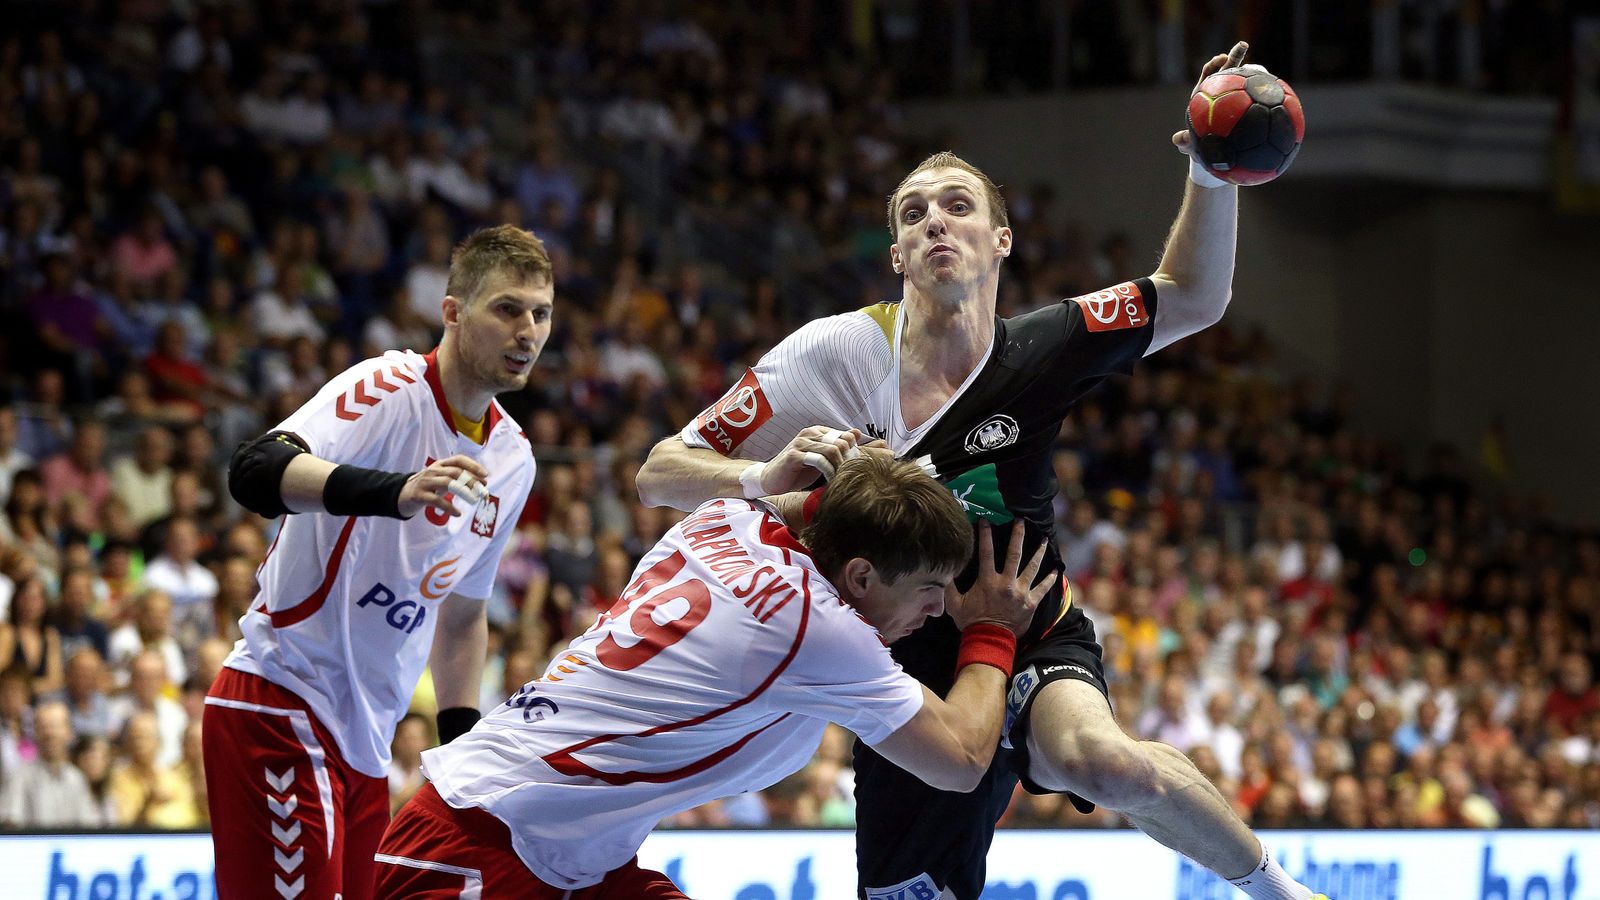 Handball World Championship 2015 fixtures and results News News Sky Sports